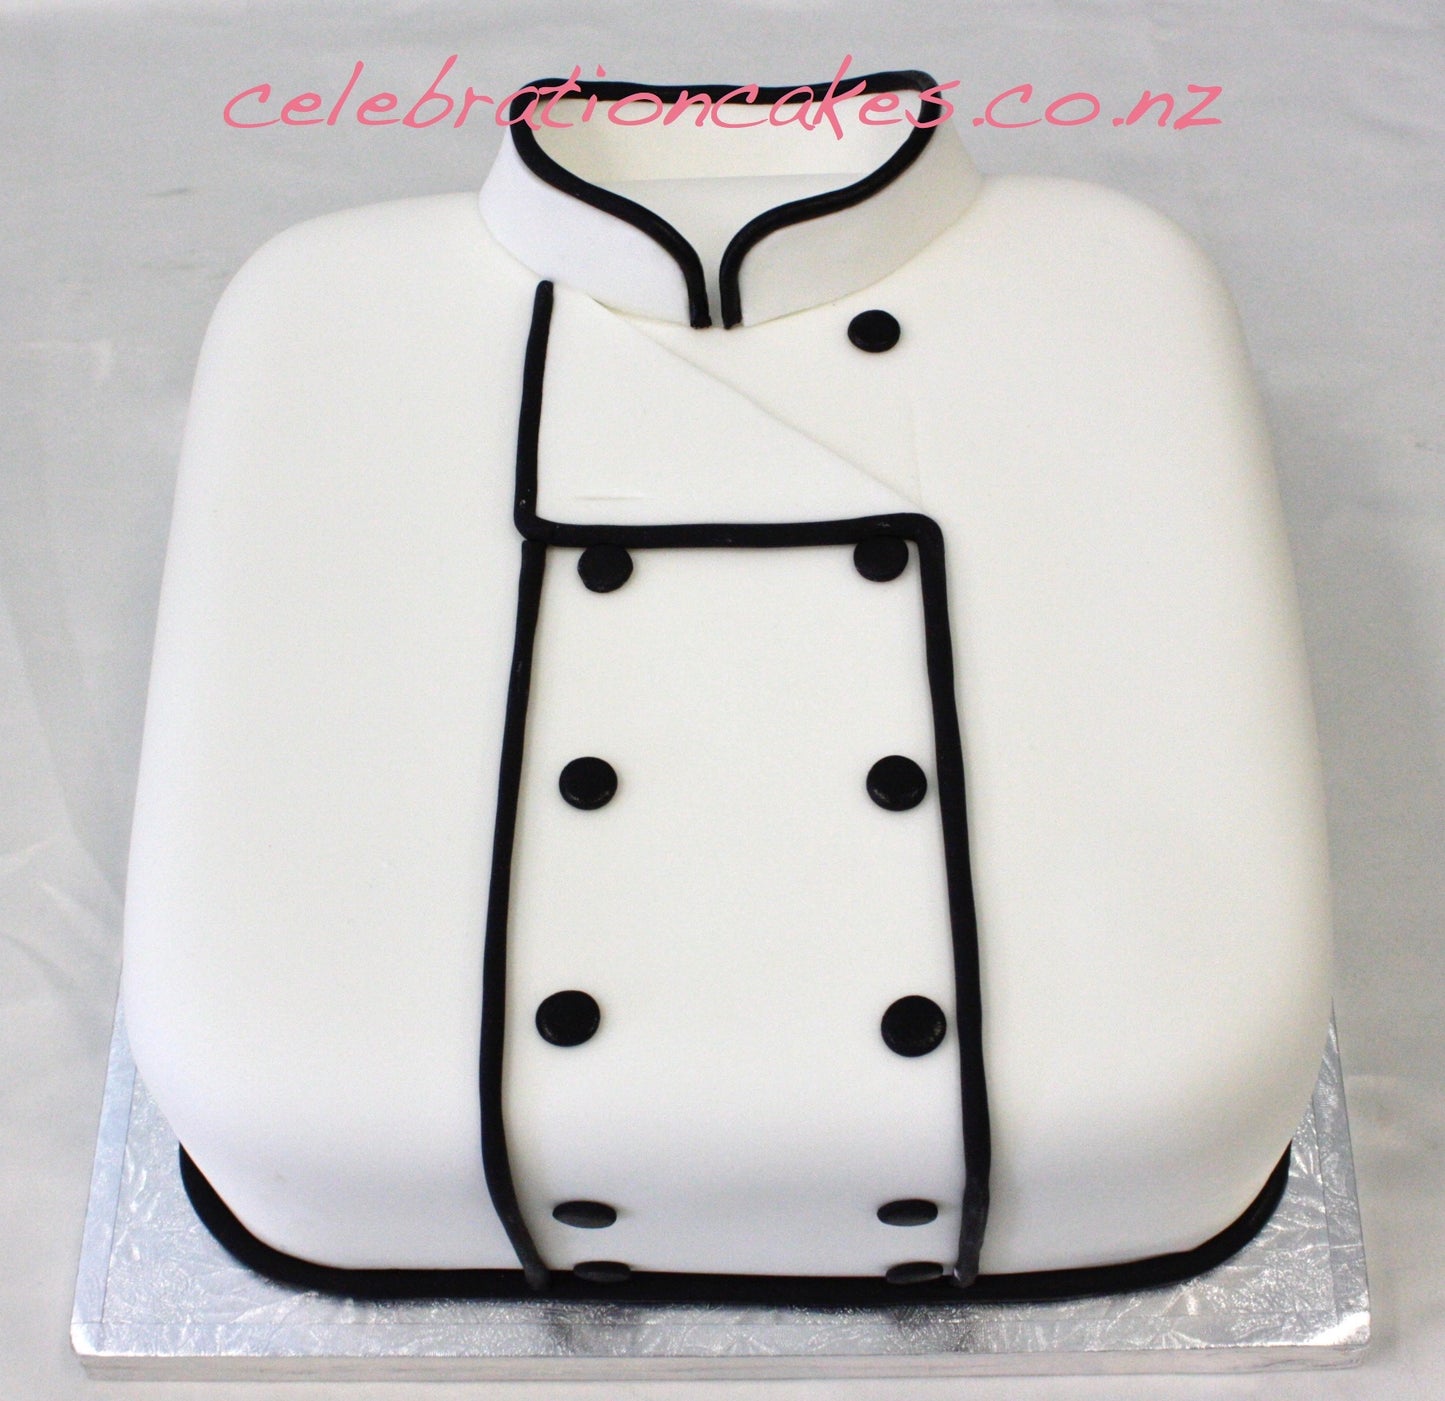 Chef coat 👩‍🍳 Cake for... - Cake P Guwahati cake Baking class | Facebook